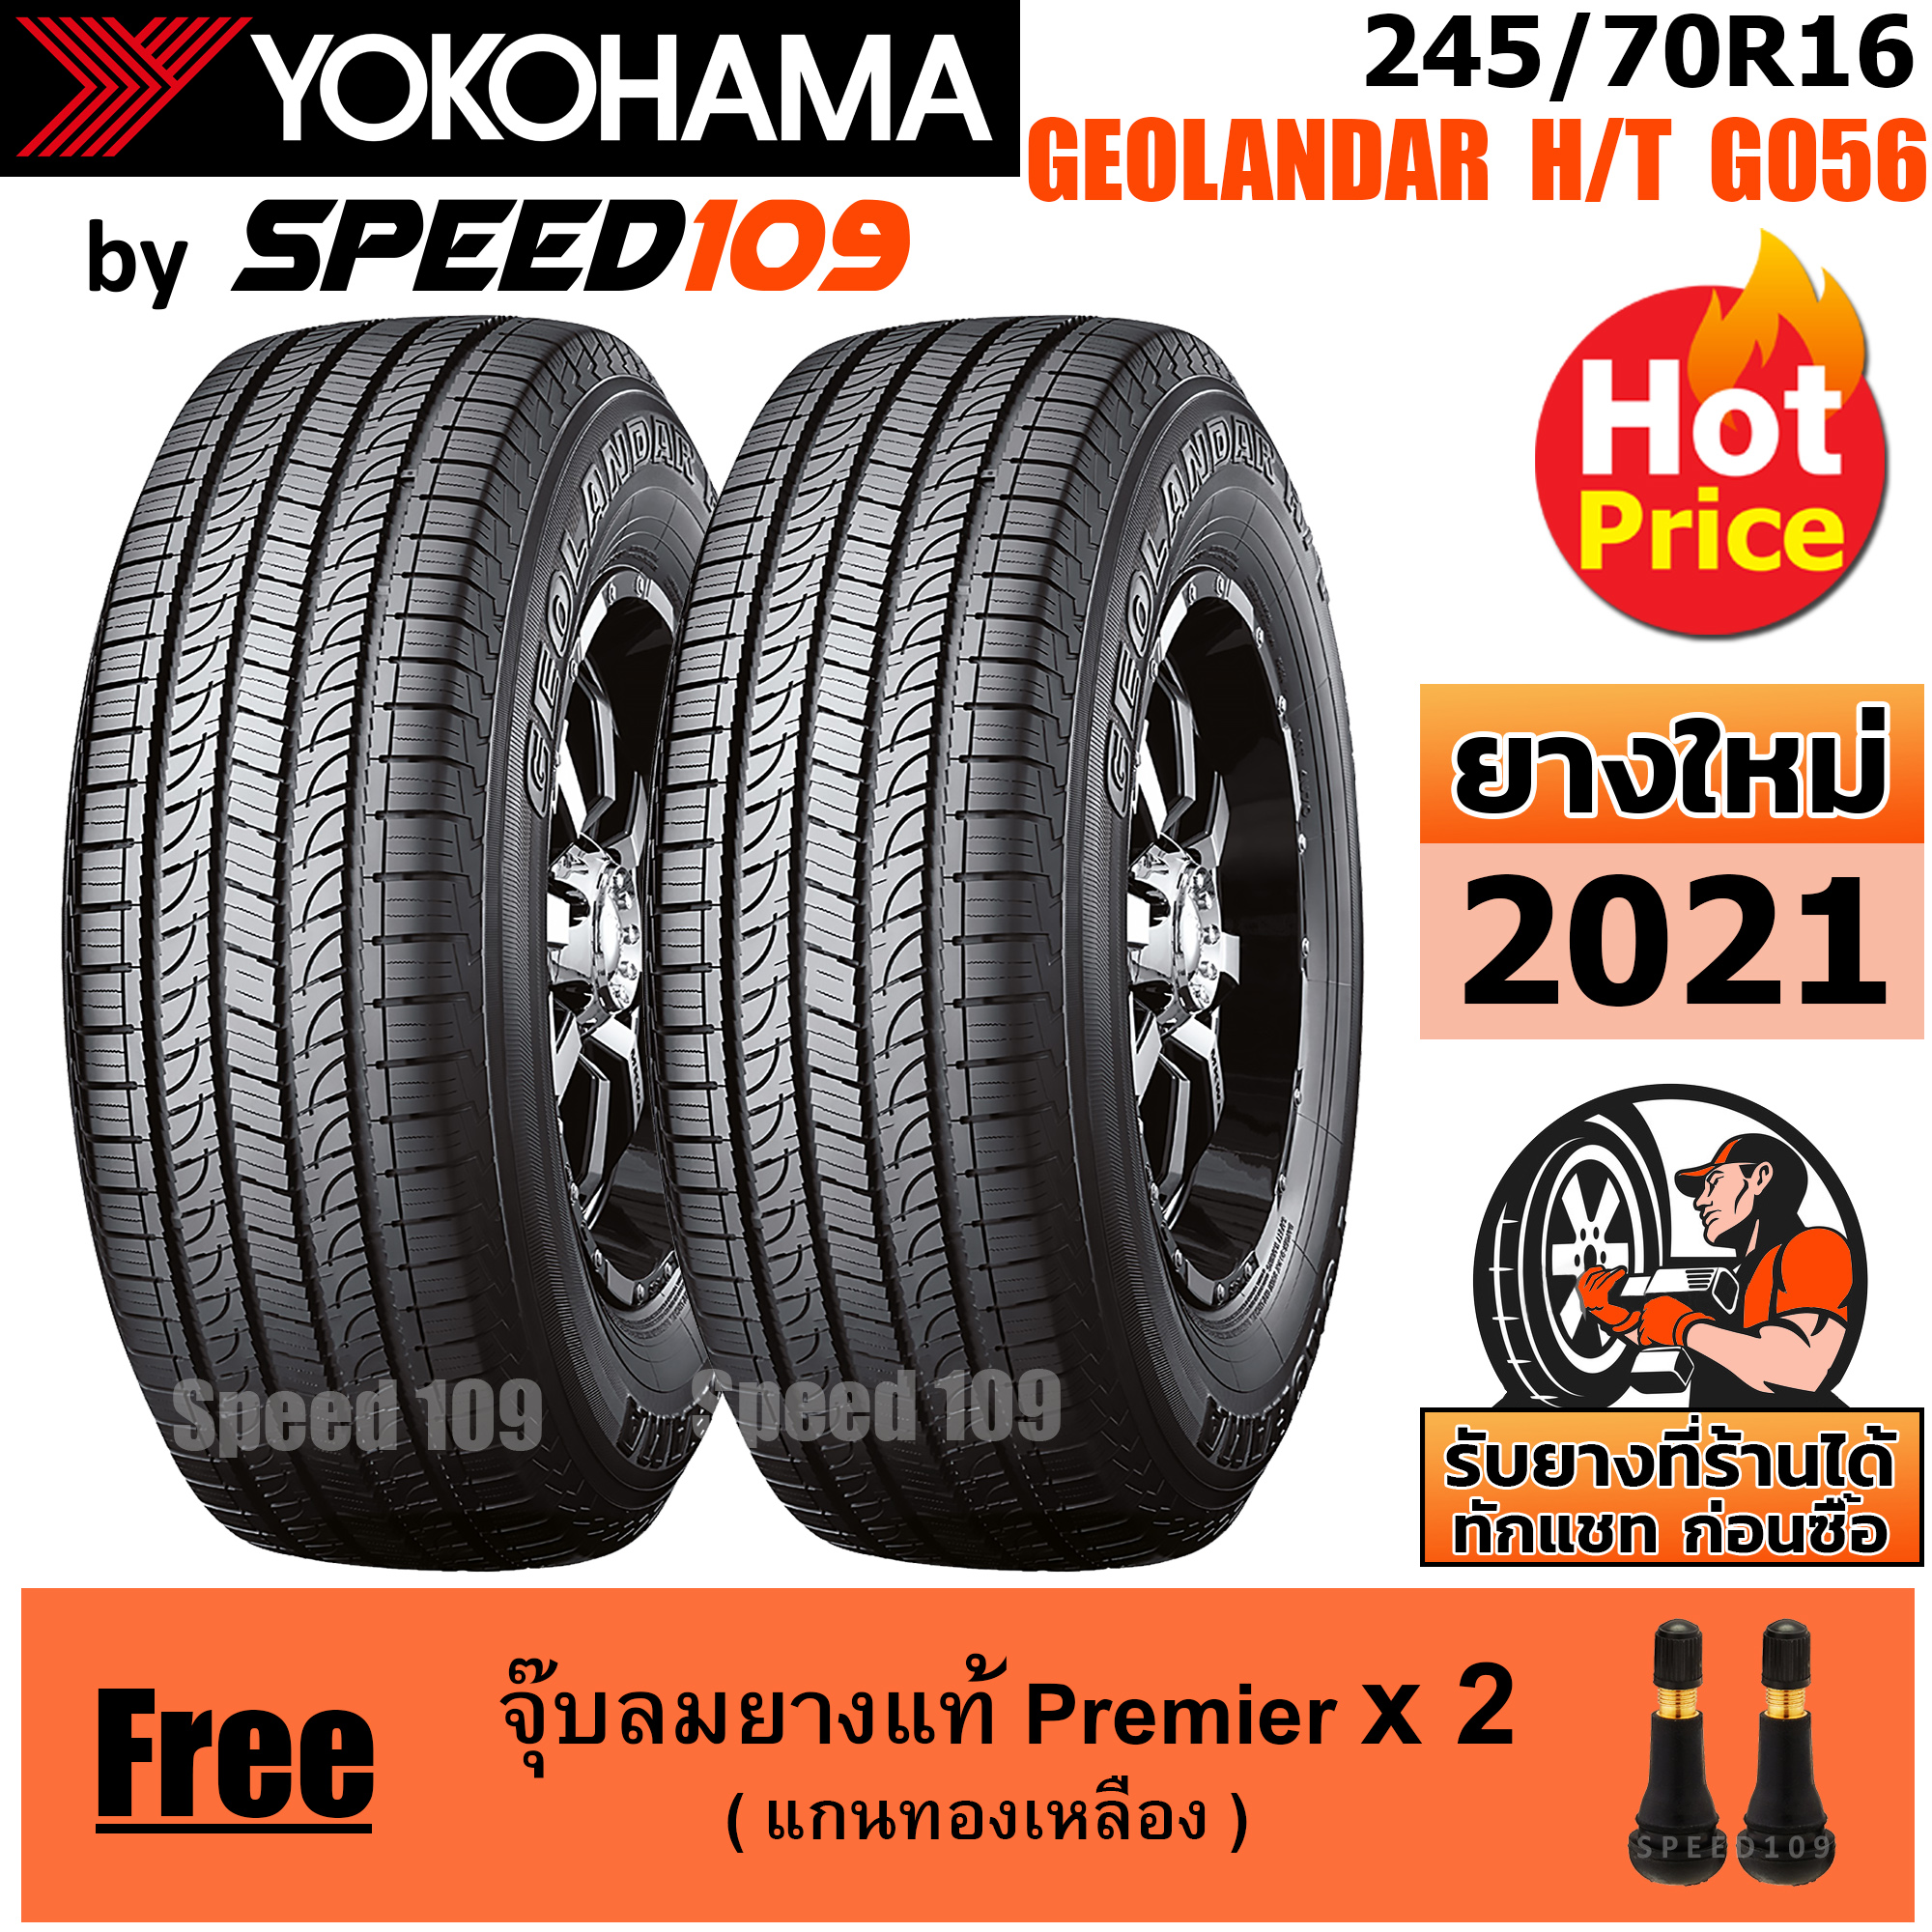 YOKOHAMA ยางรถยนต์ ขอบ 16 ขนาด 245/70R16 รุ่น GEOLANDAR H/T G056 - 2 เส้น (ปี 2021)